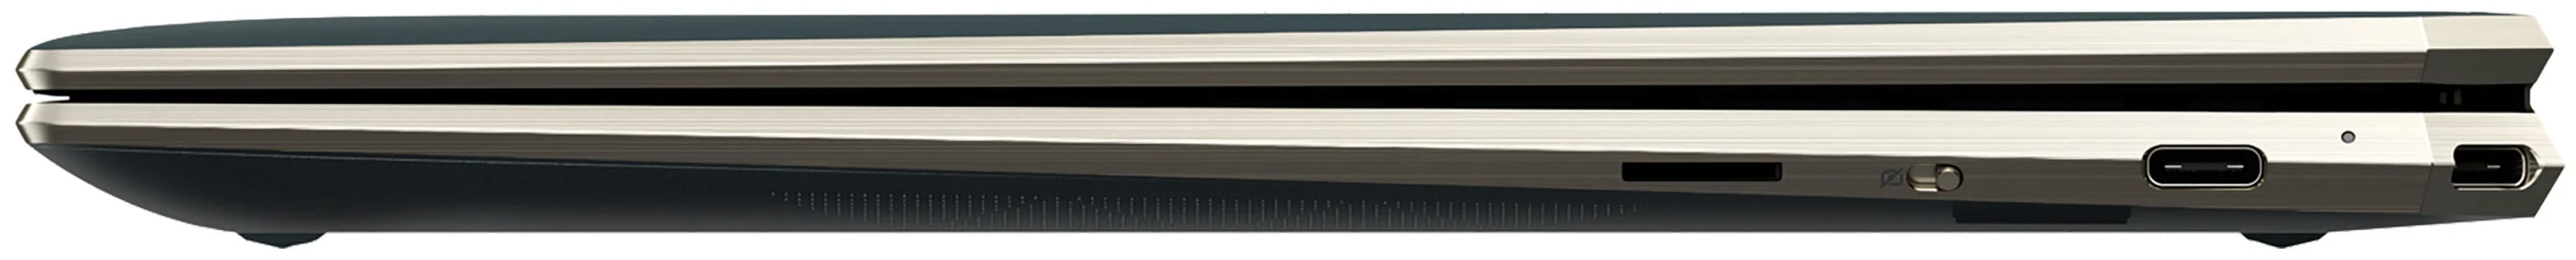 13.3" HP Spectre x360 13-aw2020ur - видеокарта: встроенная, Intel Iris Xe Graphics